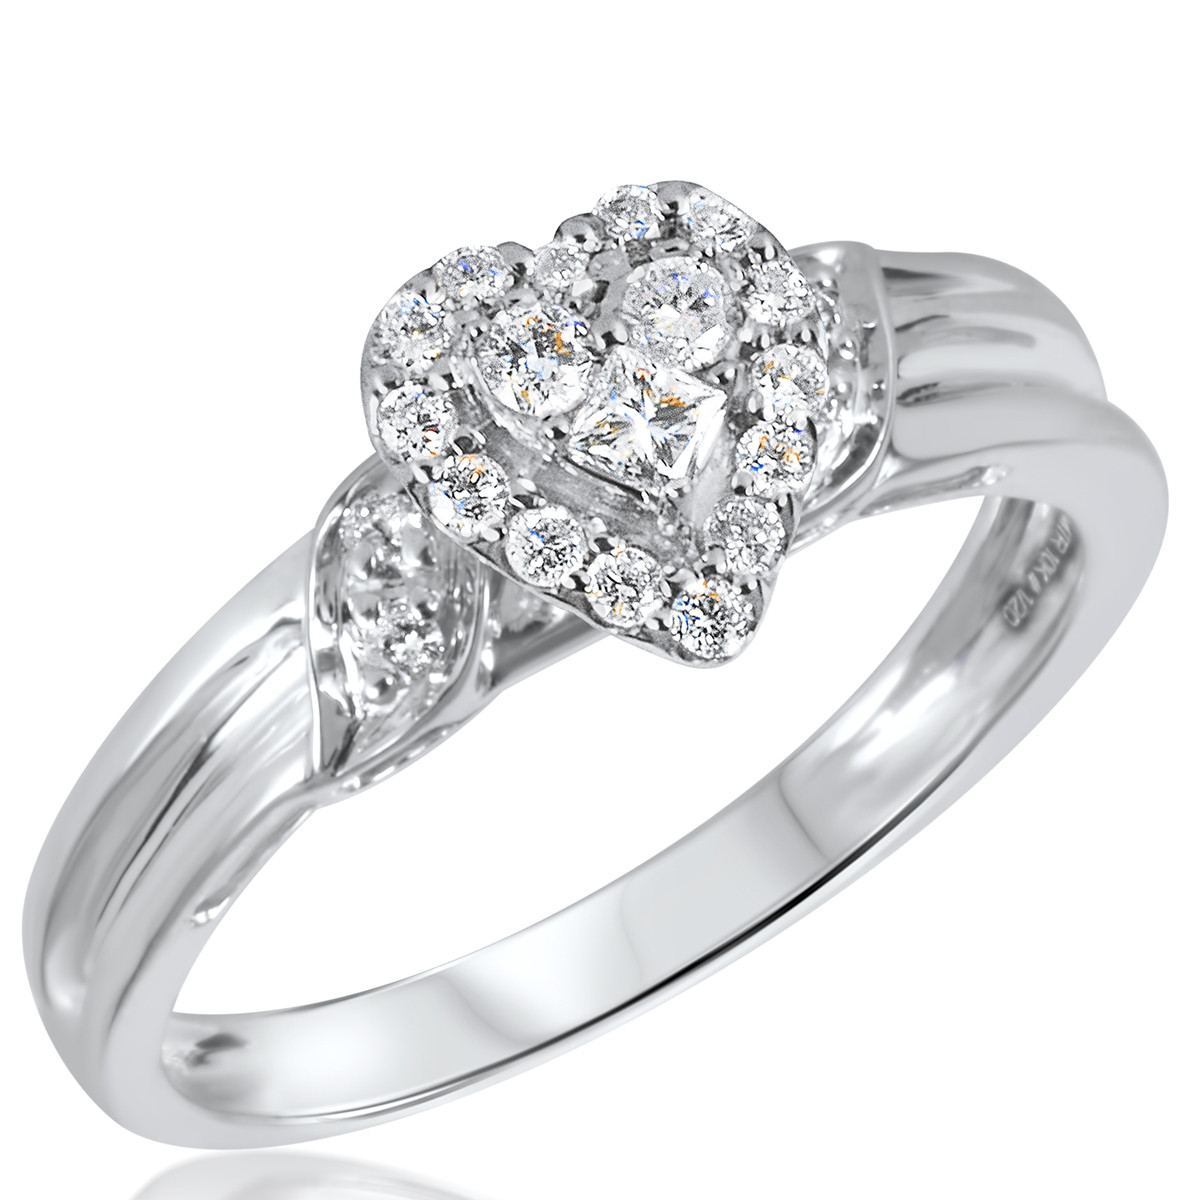 White Gold Diamond Rings For Women
 1 3 CT T W Diamond Women s Bridal Wedding Ring Set 10K